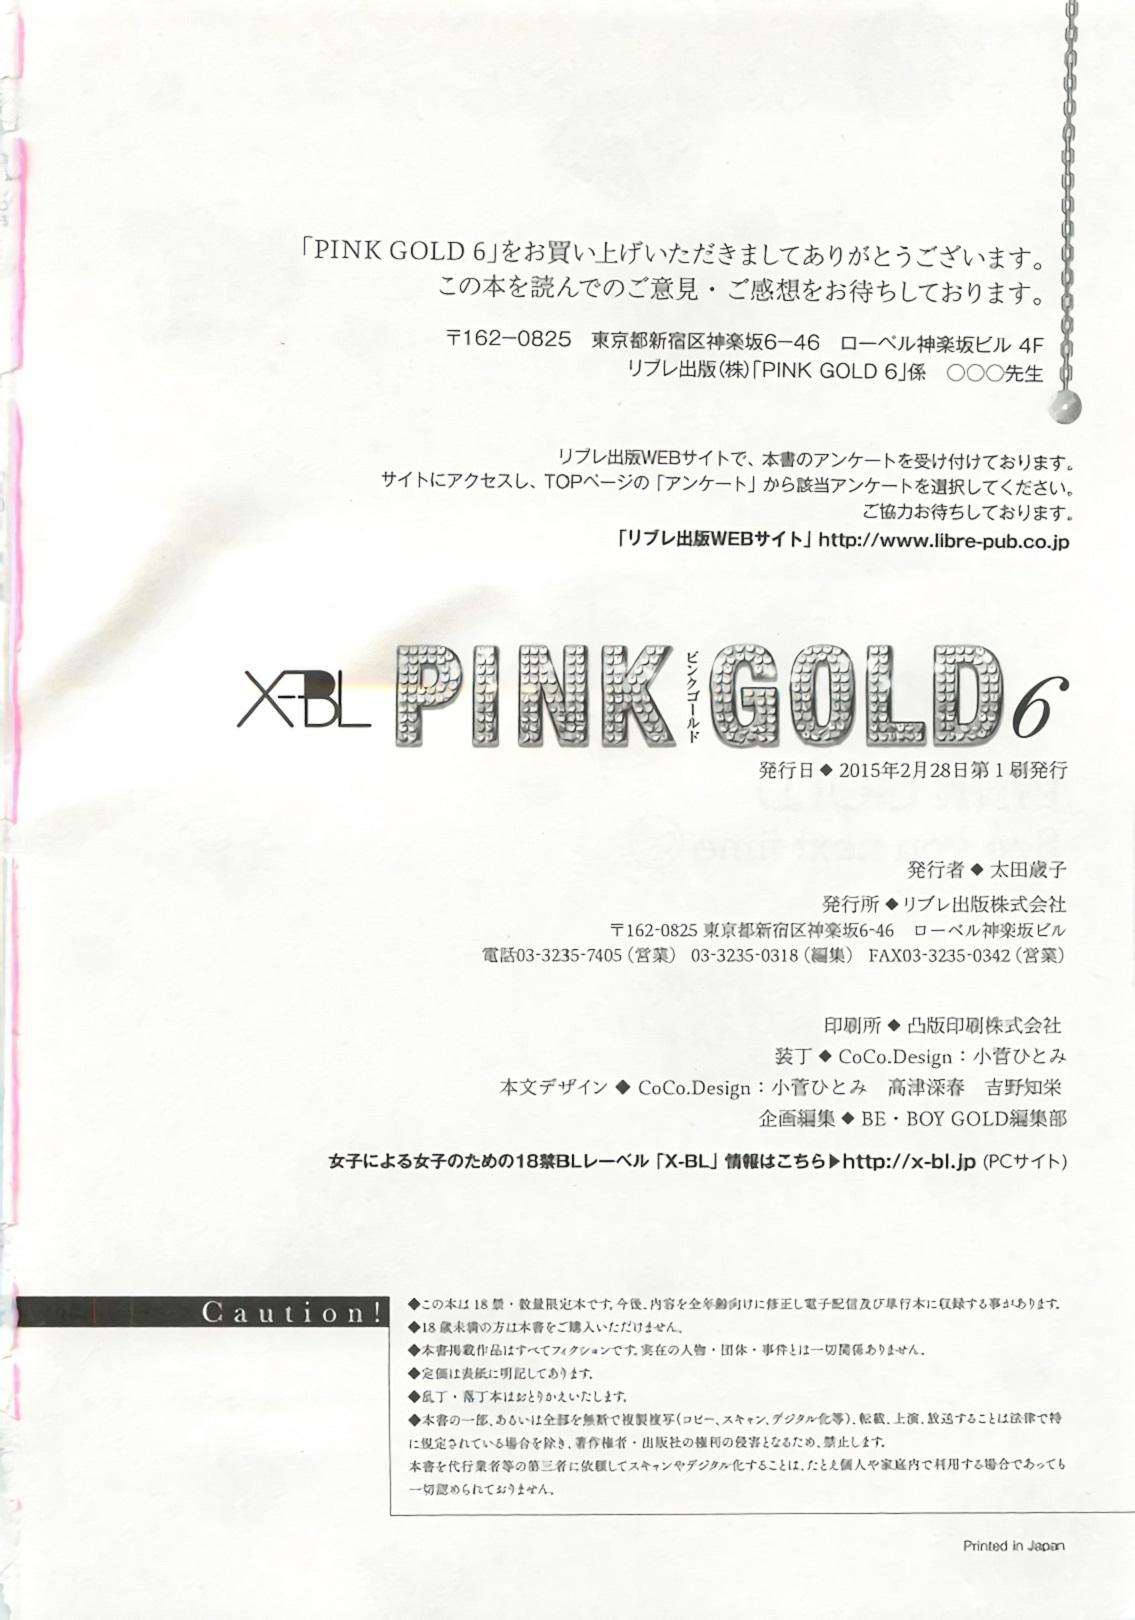 Pink Gold 6 325